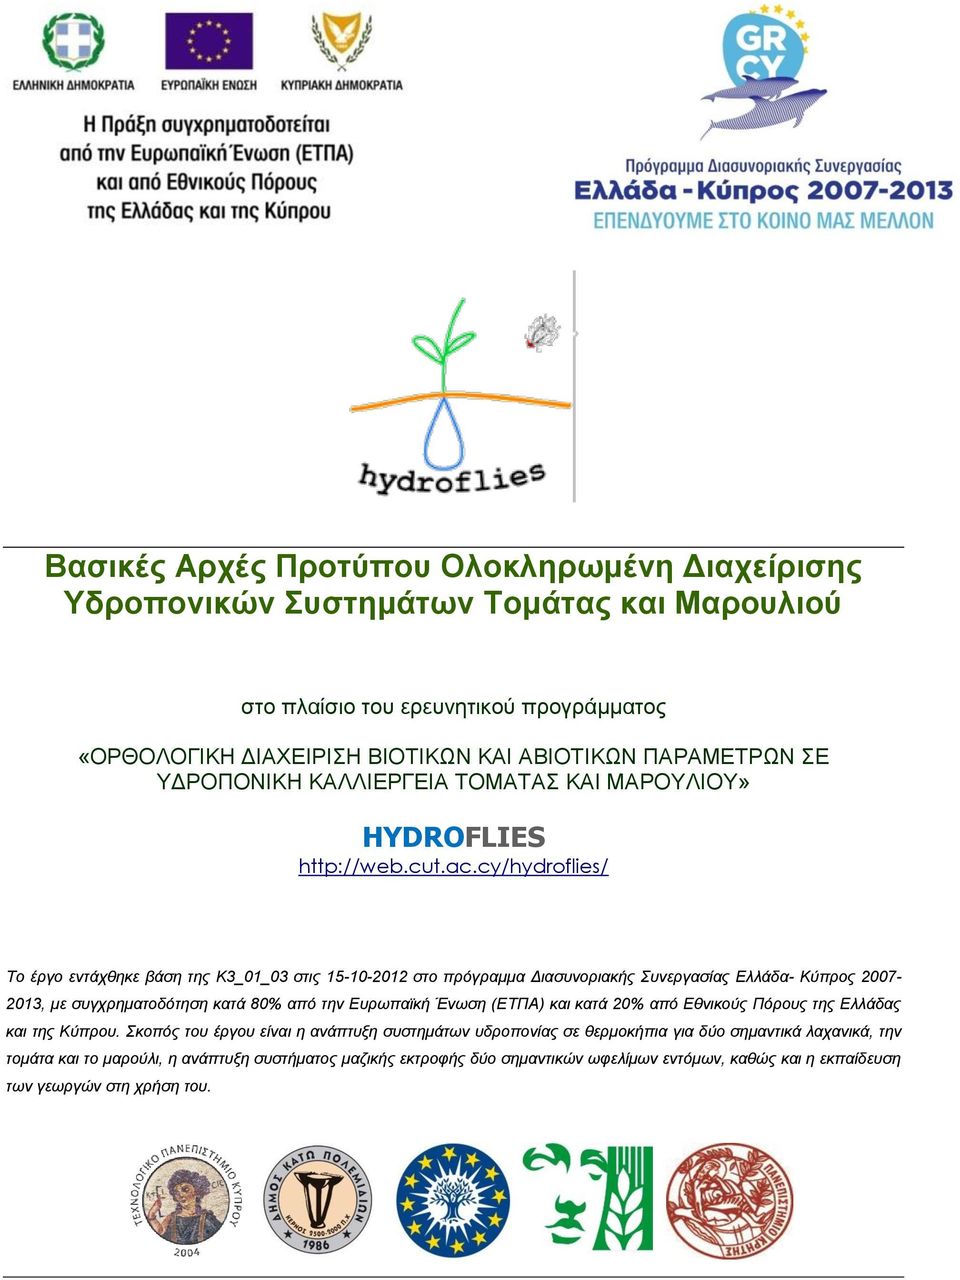 cy/hydroflies/ Το έργο εντάχθηκε βάση της Κ3_01_03 στις 15-10-2012 στο πρόγραμμα Διασυνοριακής Συνεργασίας Ελλάδα- Κύπρος 2007-2013, με συγχρηματοδότηση κατά 80% από την Ευρωπαϊκή